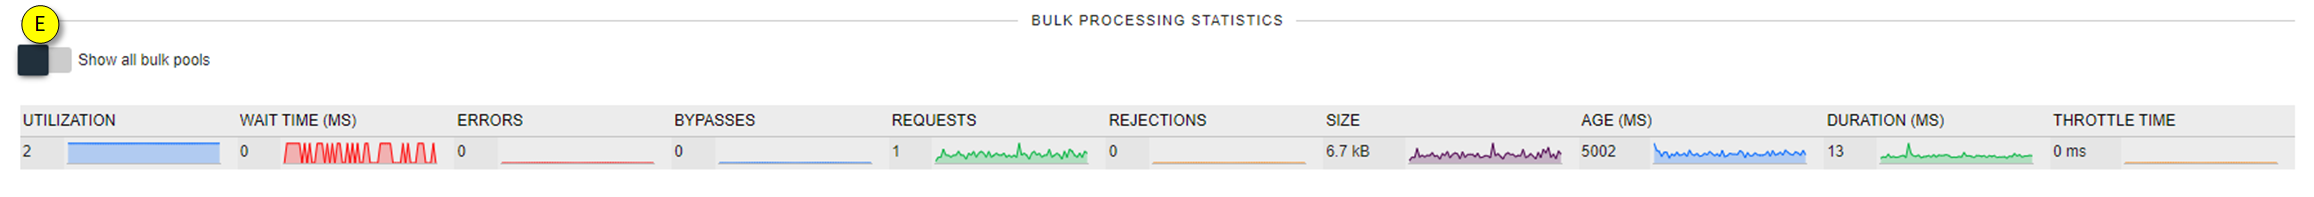 Bulk processing statistics